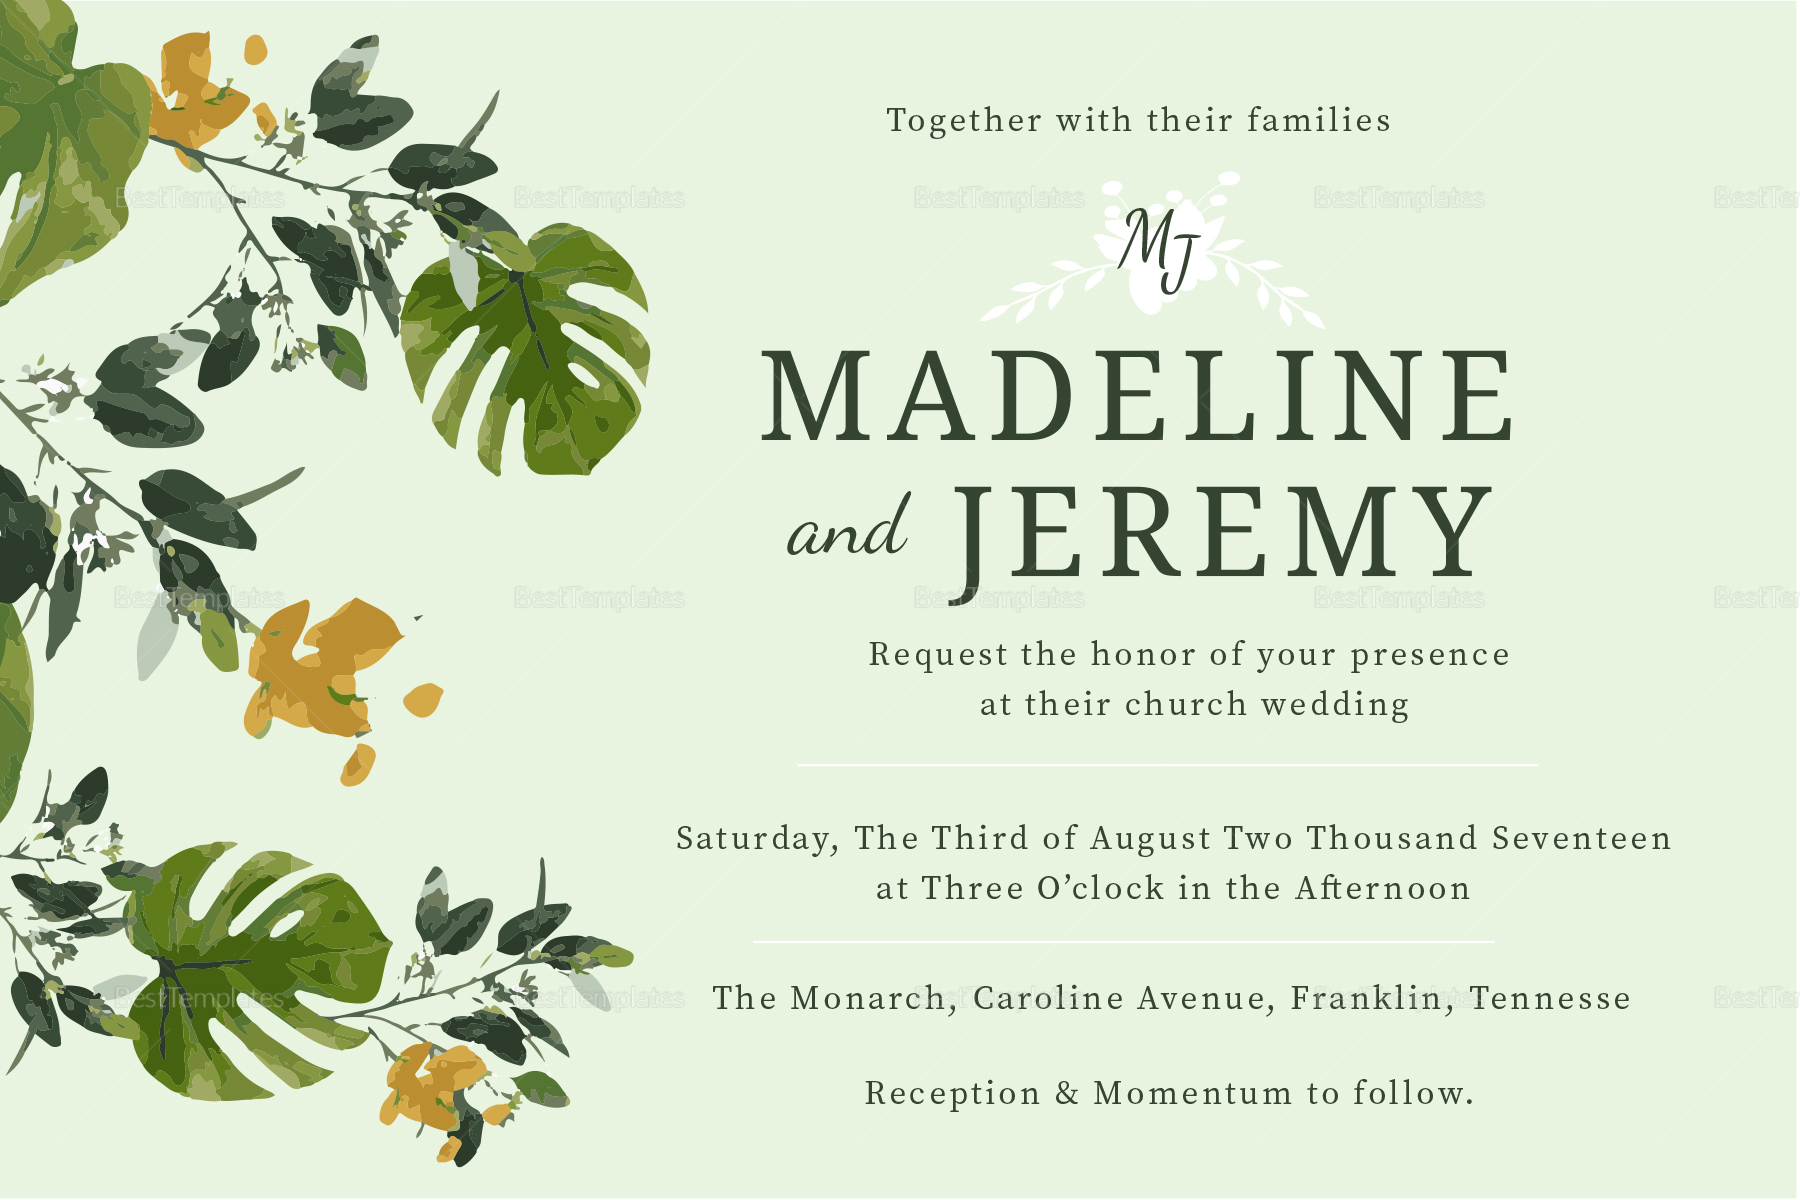 Church Wedding Invitation In Landscape And Portrait Regarding Church Wedding Invitation Card Template